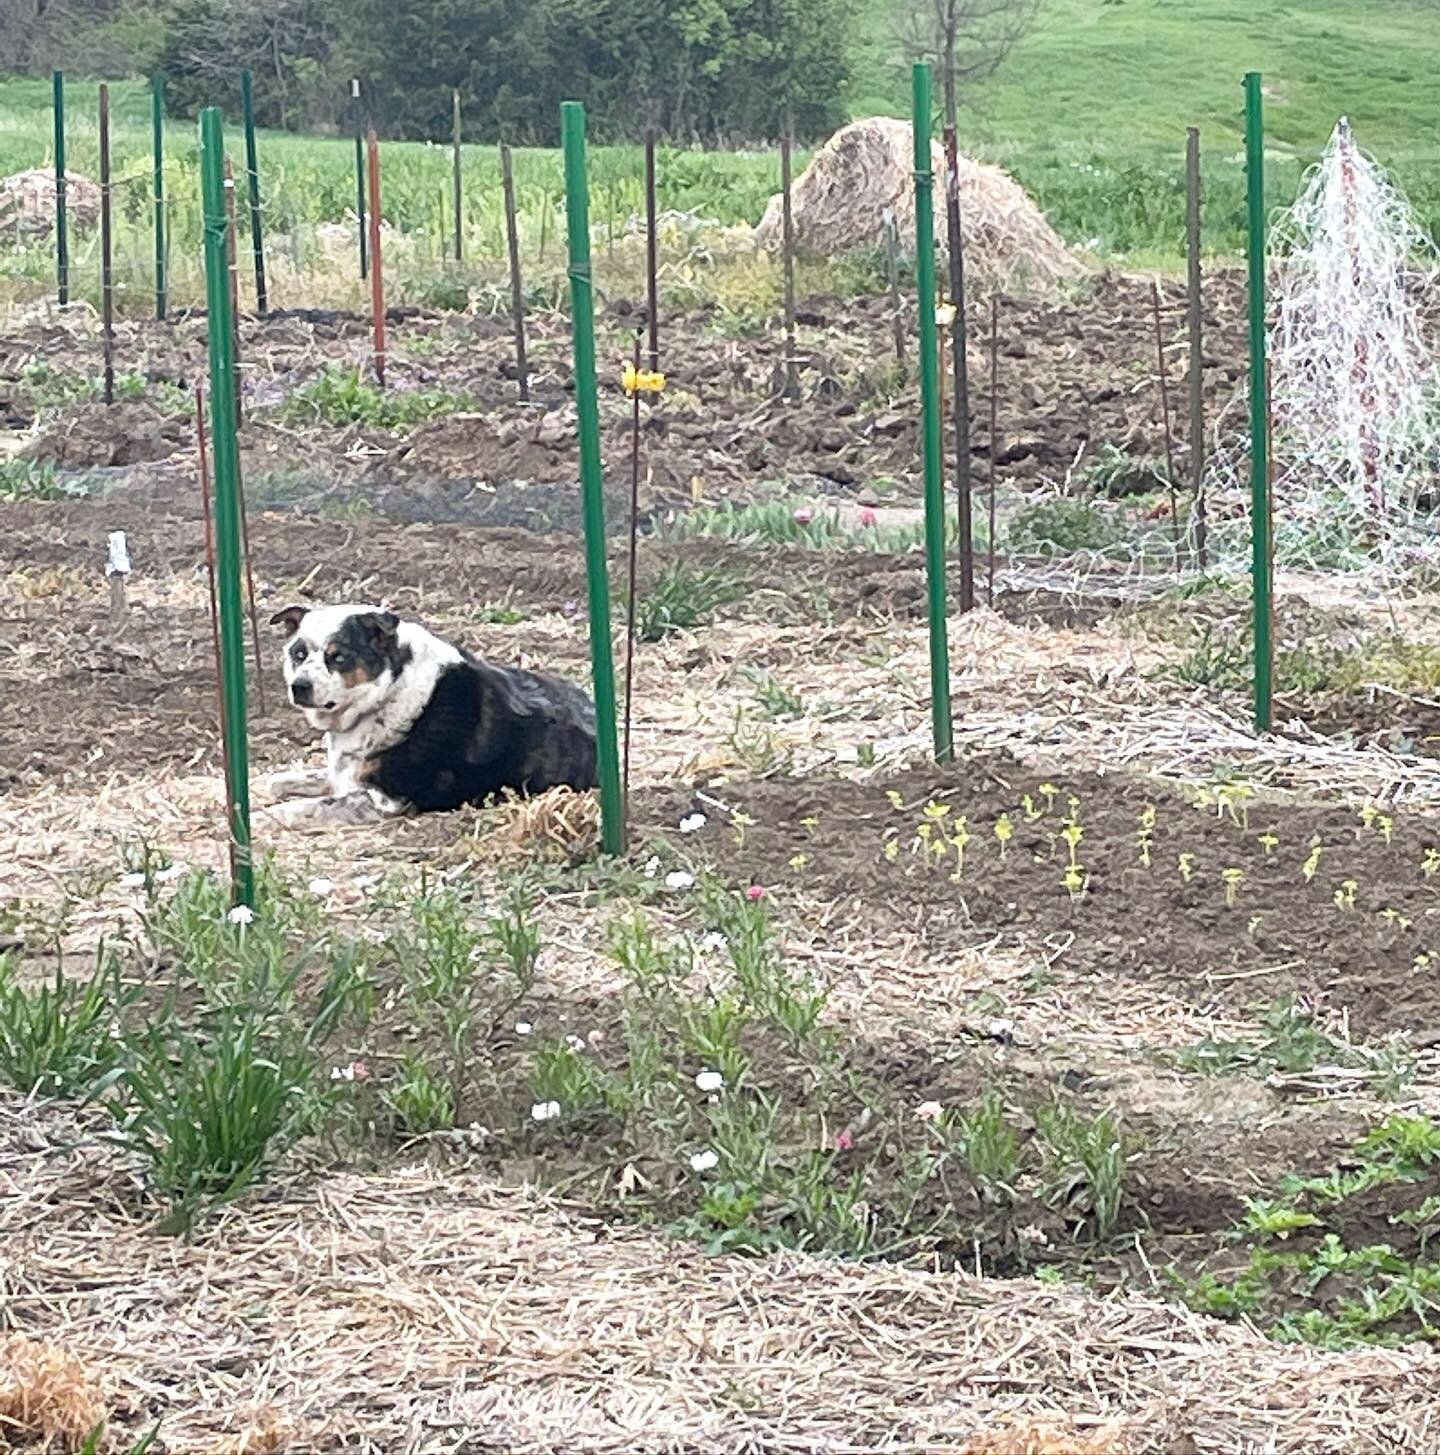 Gus in his element&hellip;.guarding the baby plants. #flowerfarm #farmdog #dogsofinstagram #flowerfarmdog #australianshepherdblueheeler